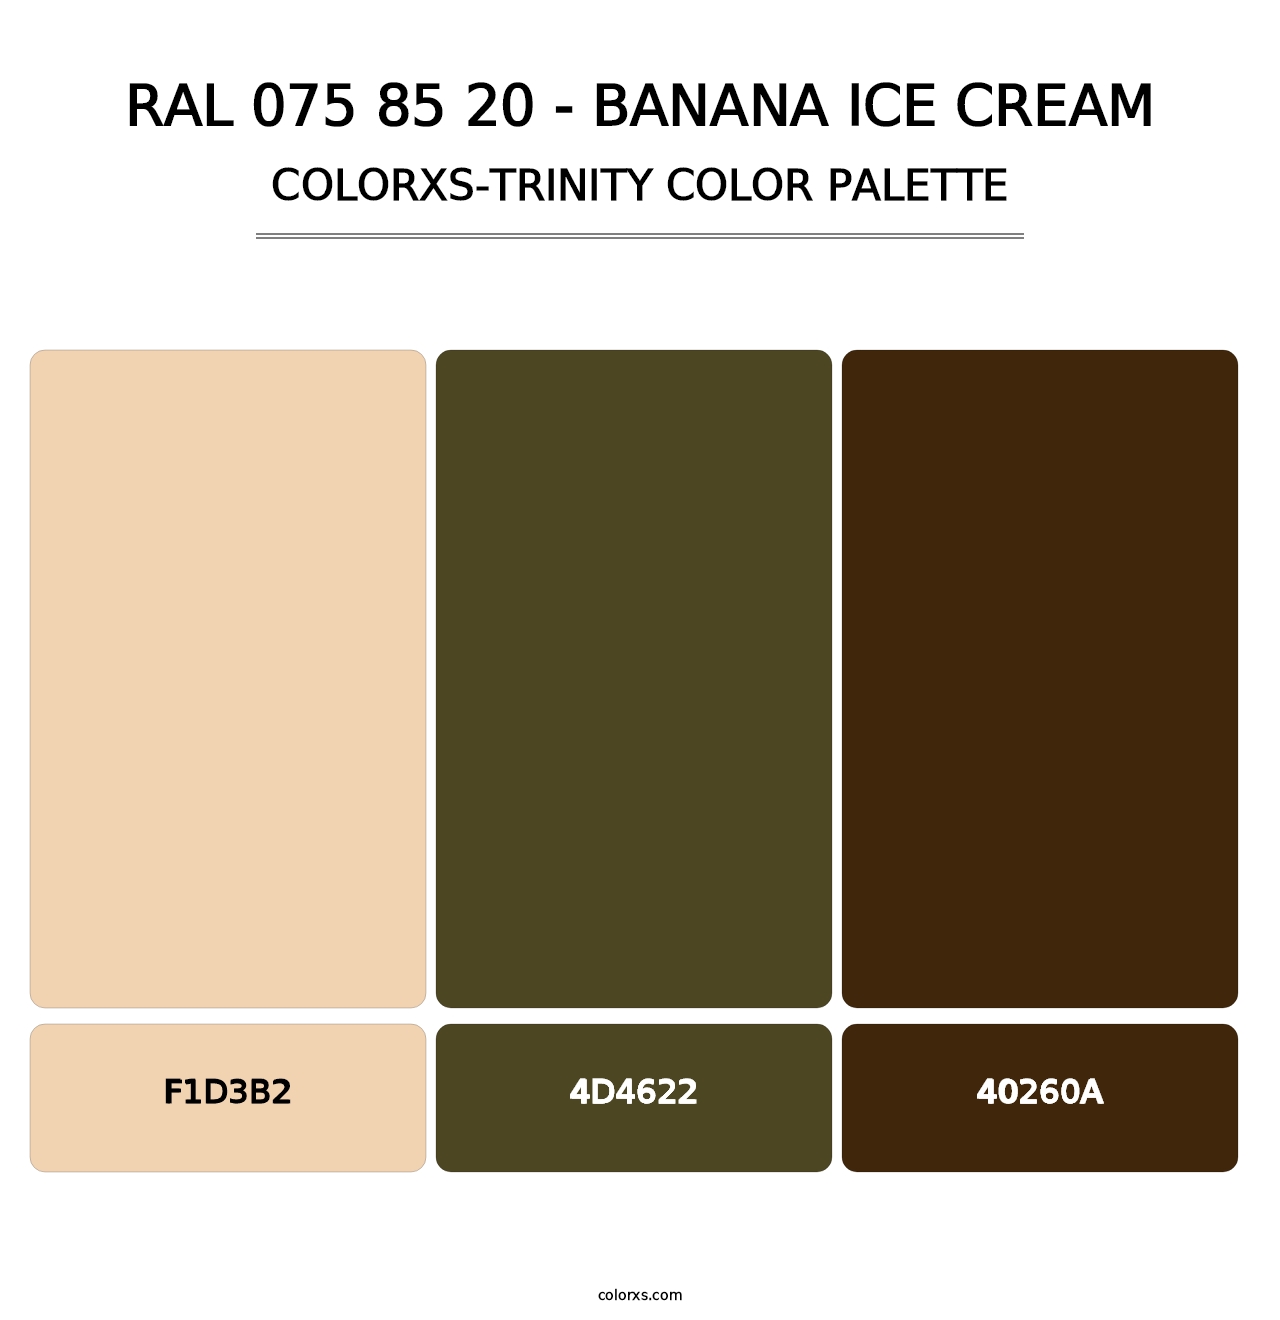 RAL 075 85 20 - Banana Ice Cream - Colorxs Trinity Palette